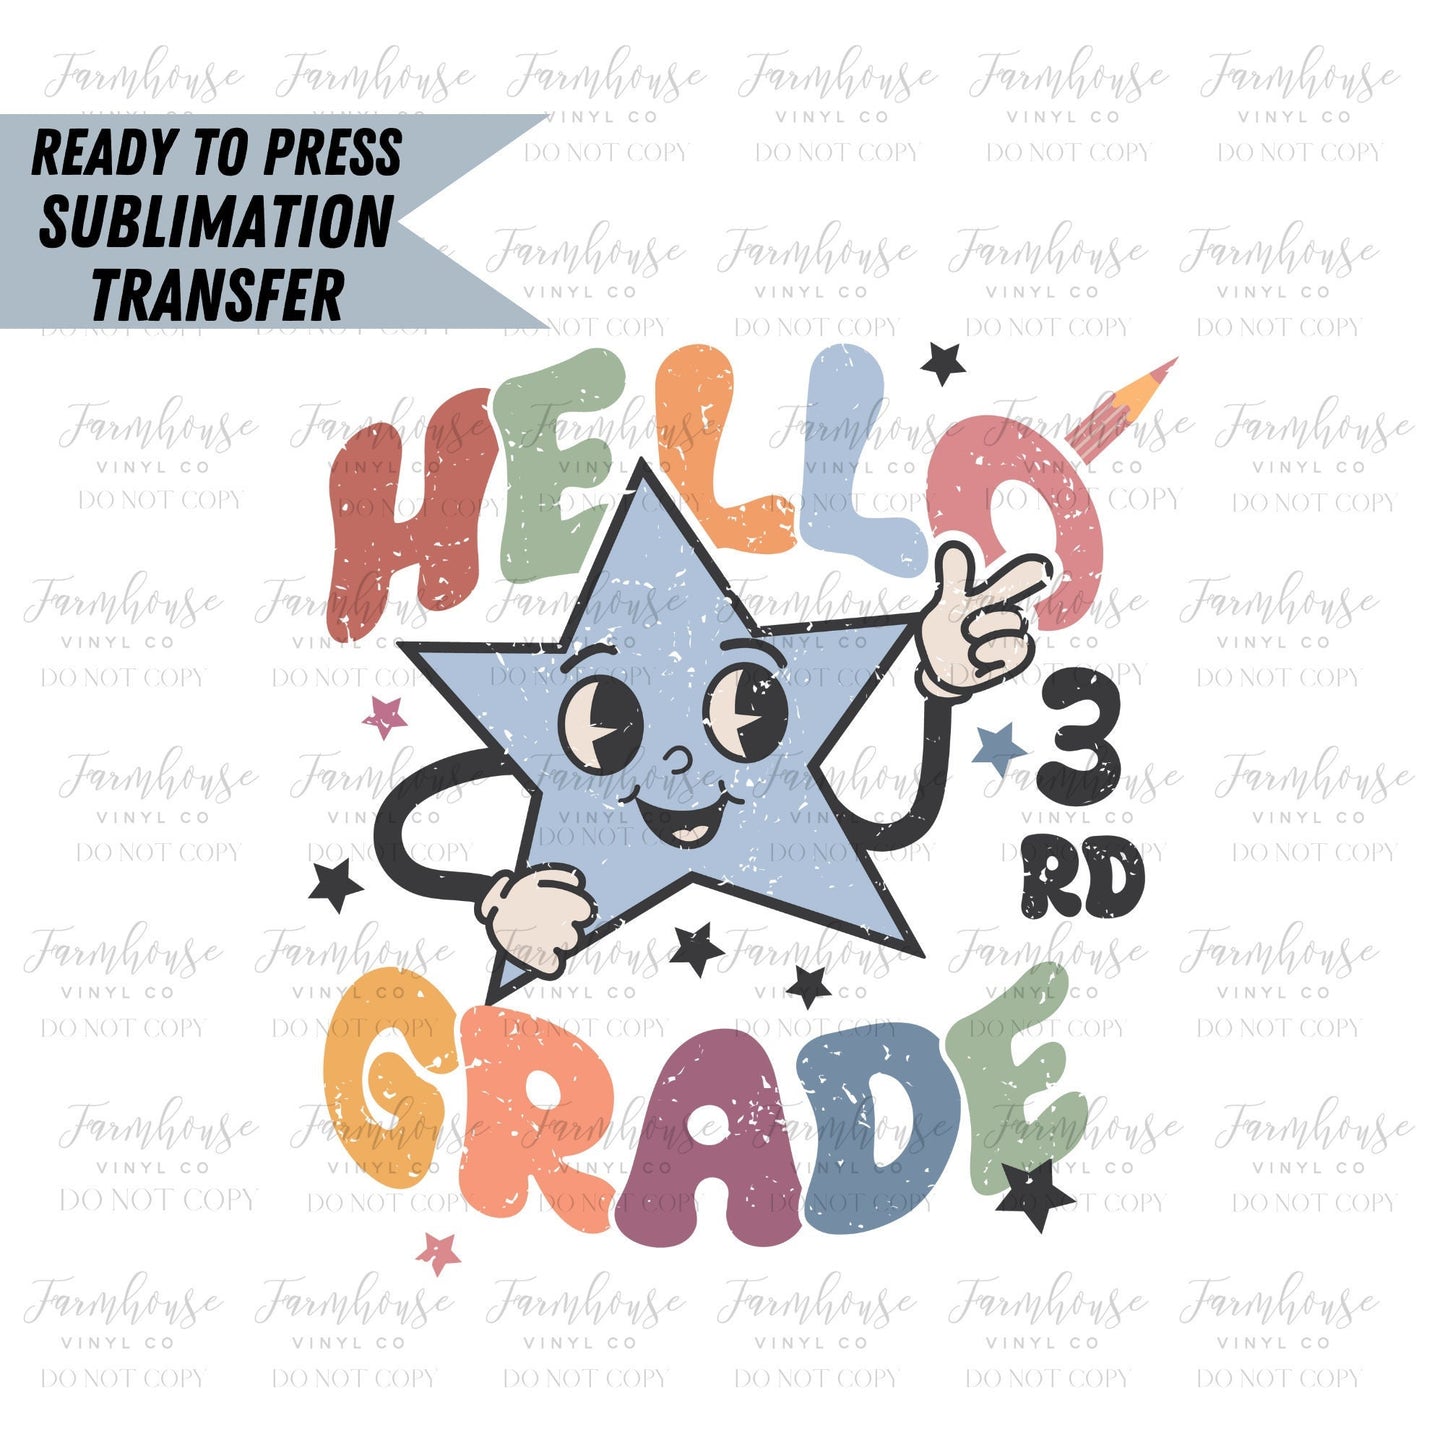 Hello Third Grade Retro Star, Ready to Press Sublimation Transfer, Sublimation Transfer, Heat Transfer, Ready to Press, First Day of School - Farmhouse Vinyl Co